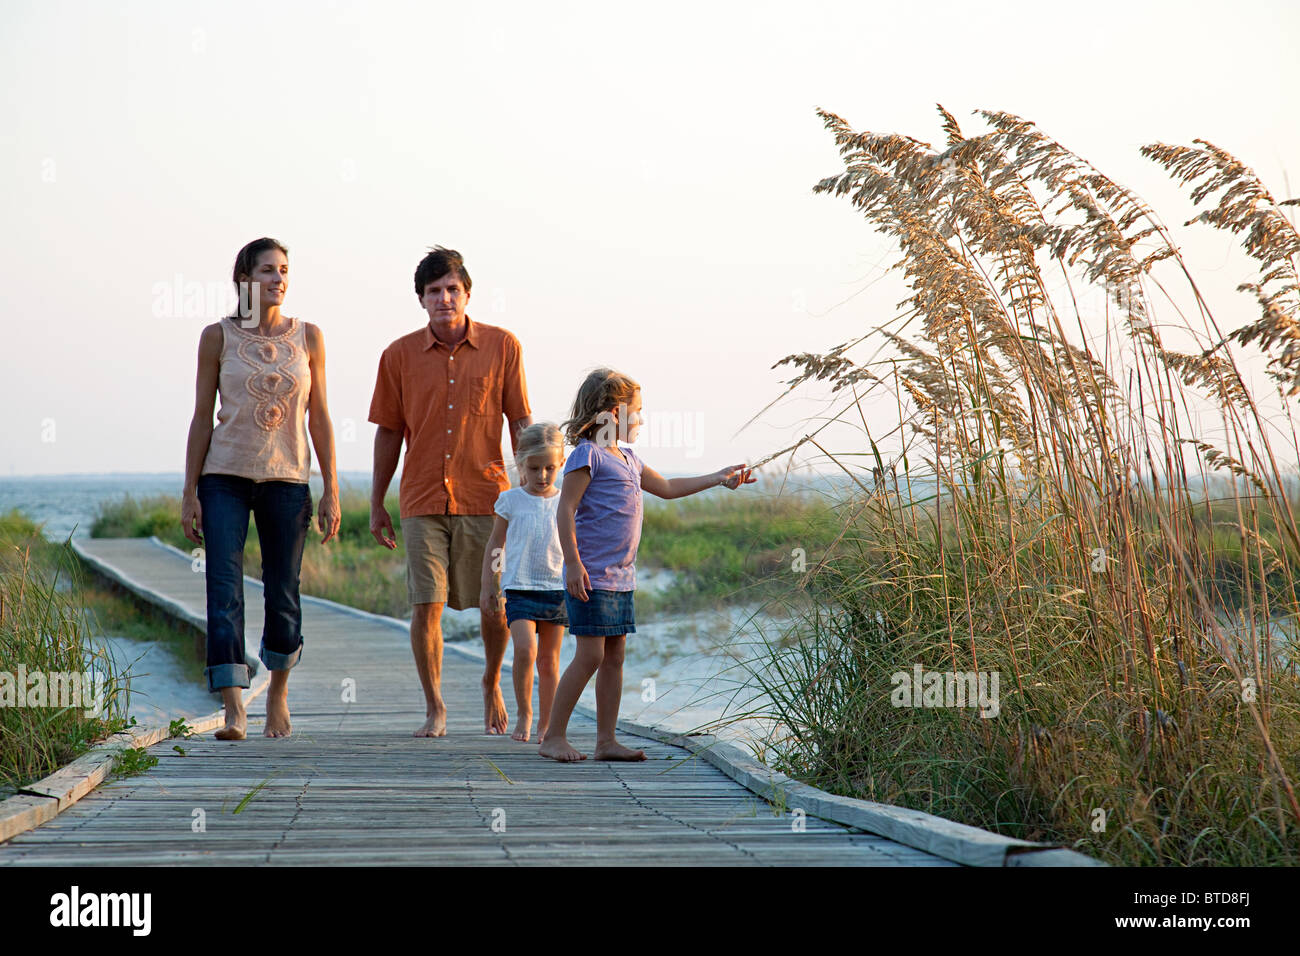 Family walking on beach walkway Stock Photo